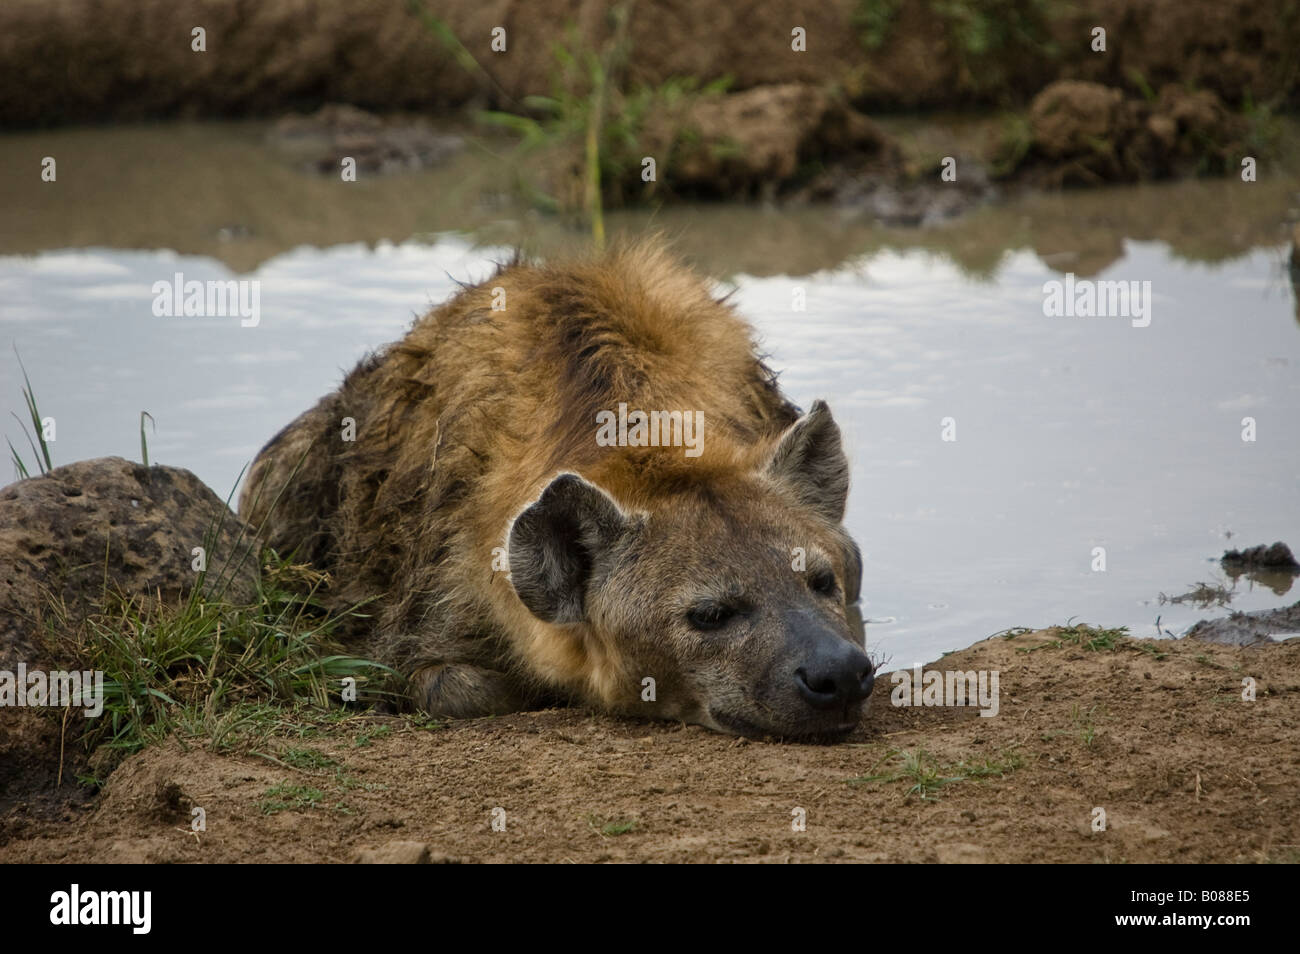 A spotted hyena lying next to a waterhole Stock Photo